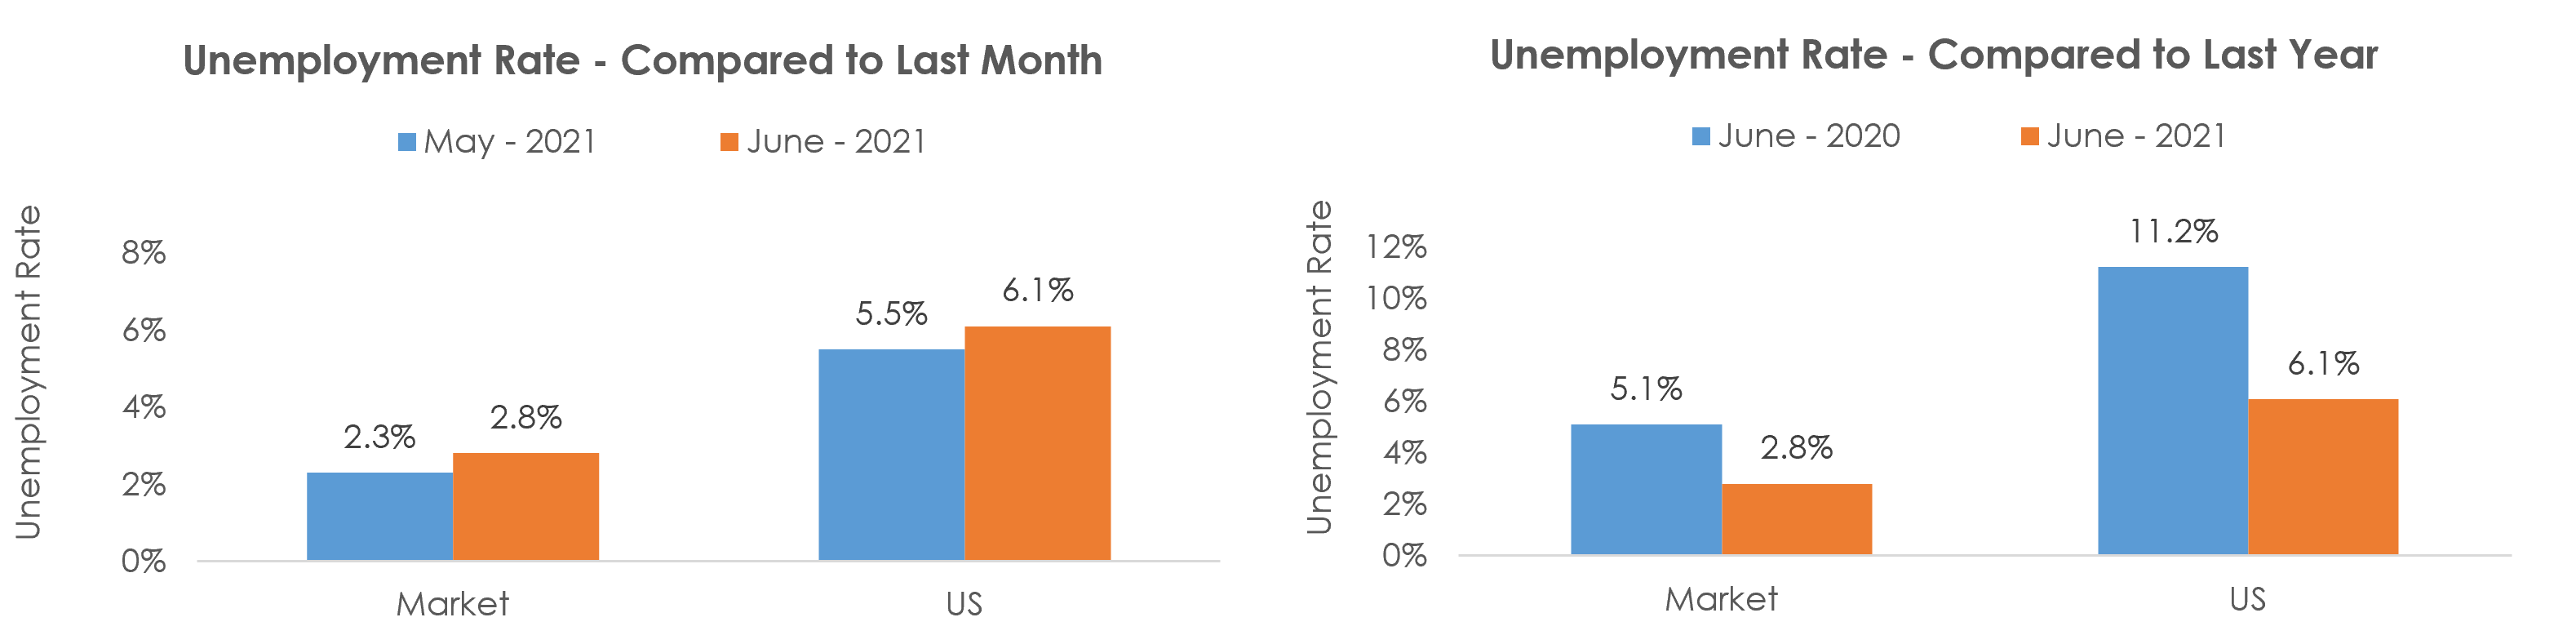 Provo-Orem, UT Unemployment June 2021